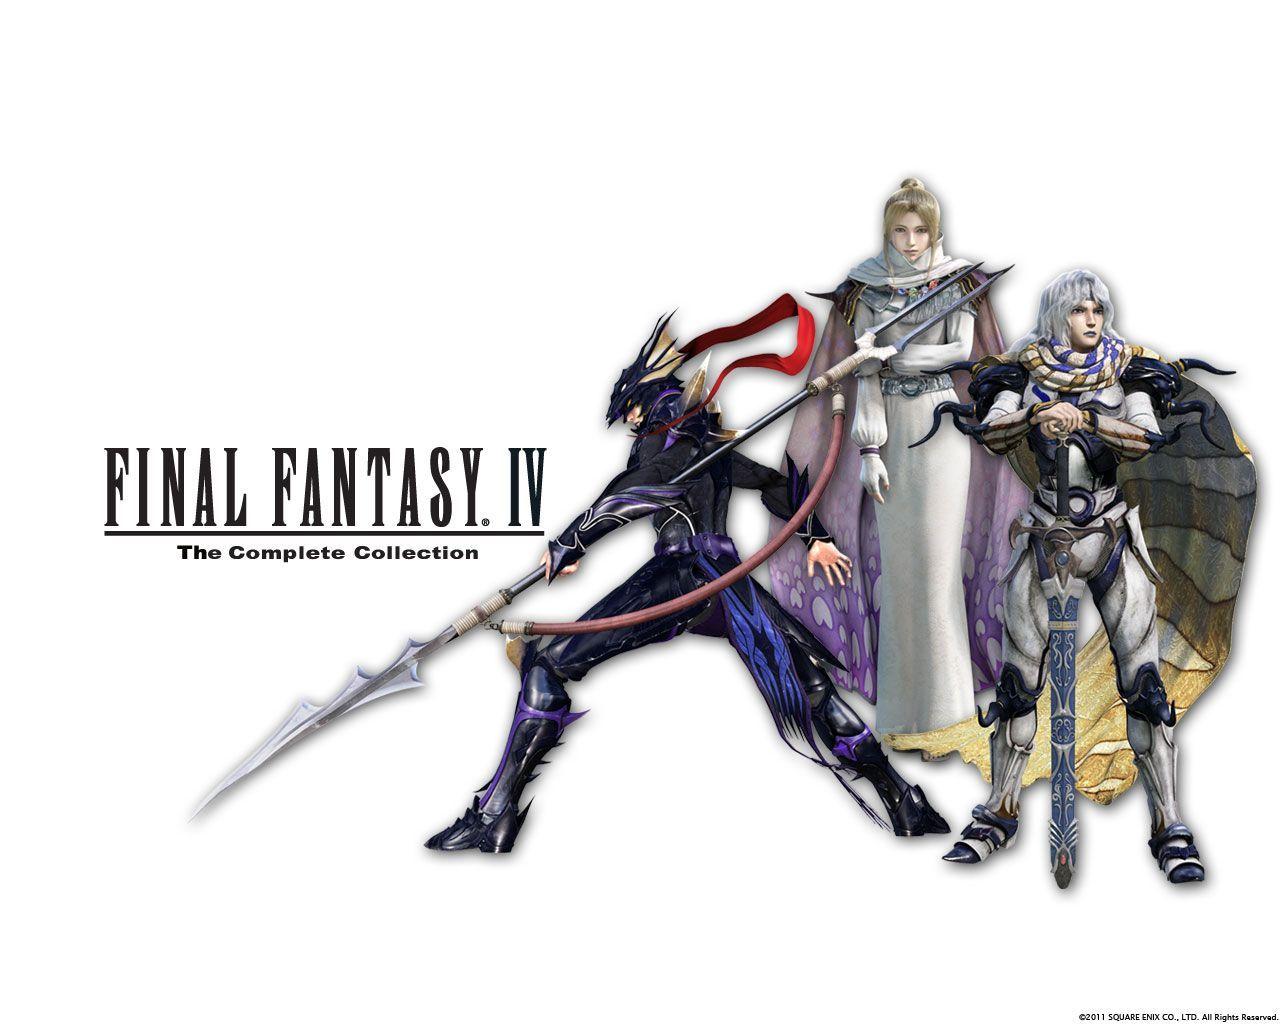 CG- Final Fantasy Wiki has more Final